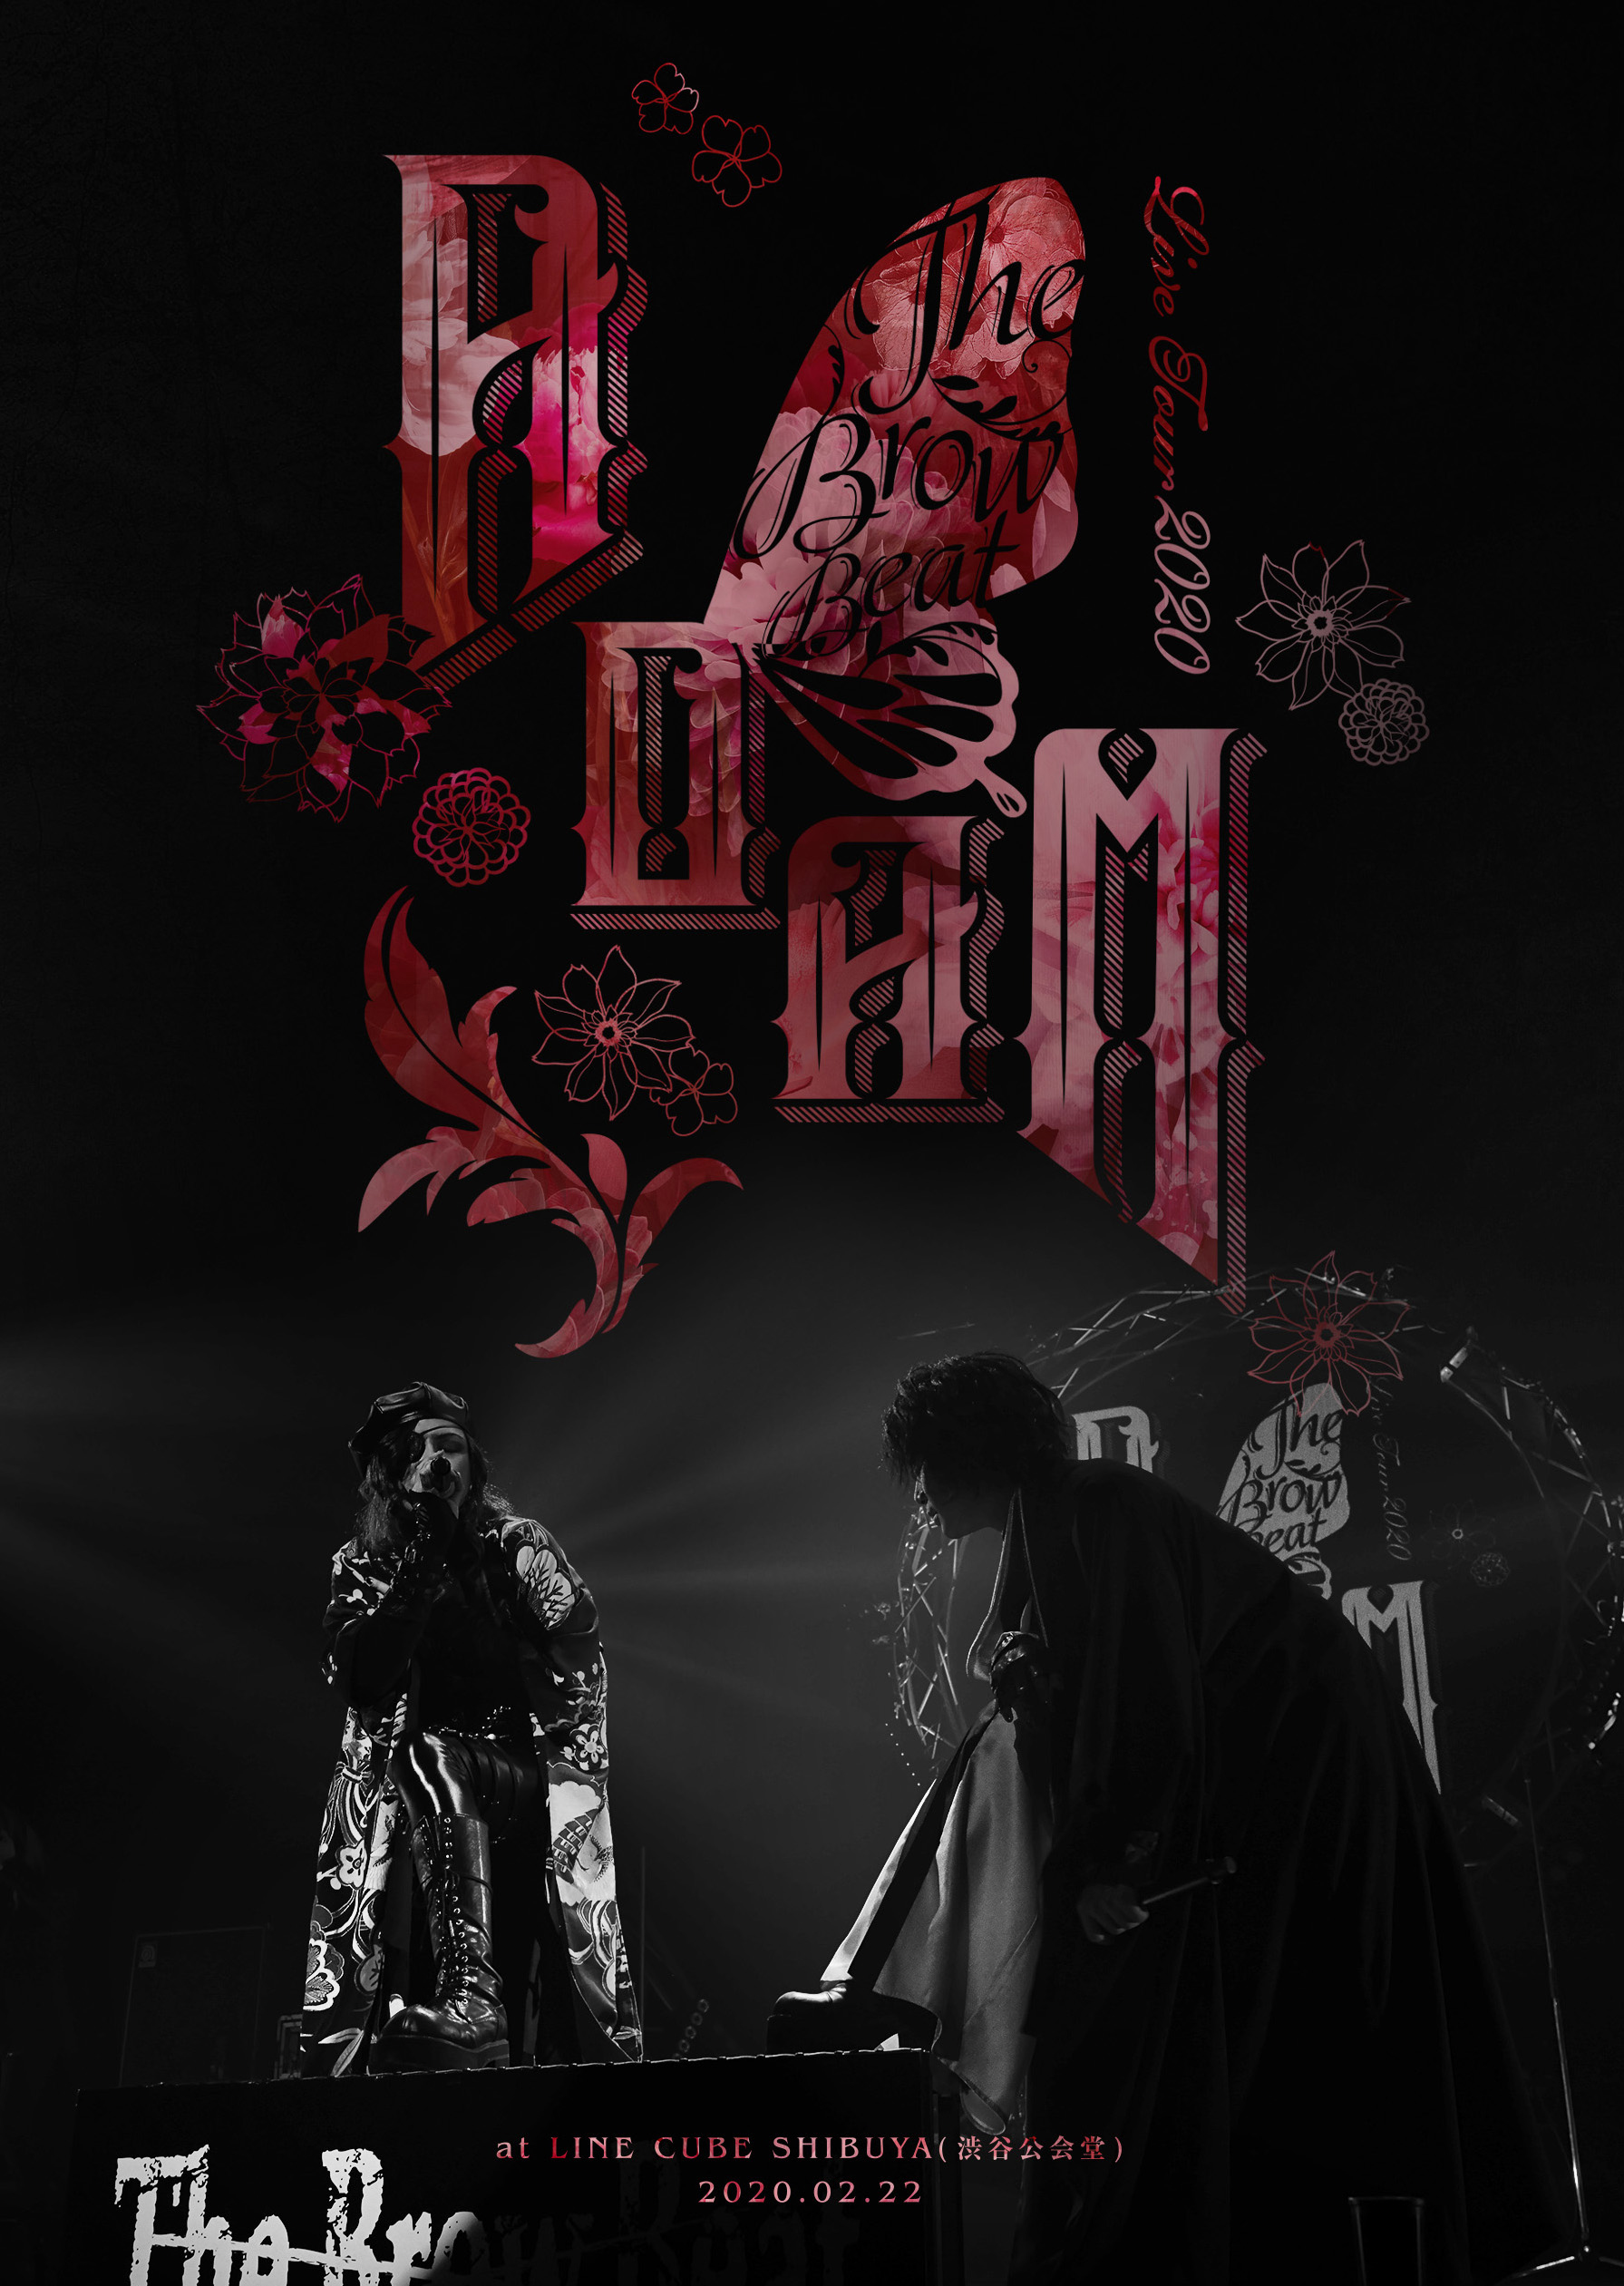 HAKUEI/TBB【DVD】2020年6月30日(火)「The Brow Beat Live Tour 2020